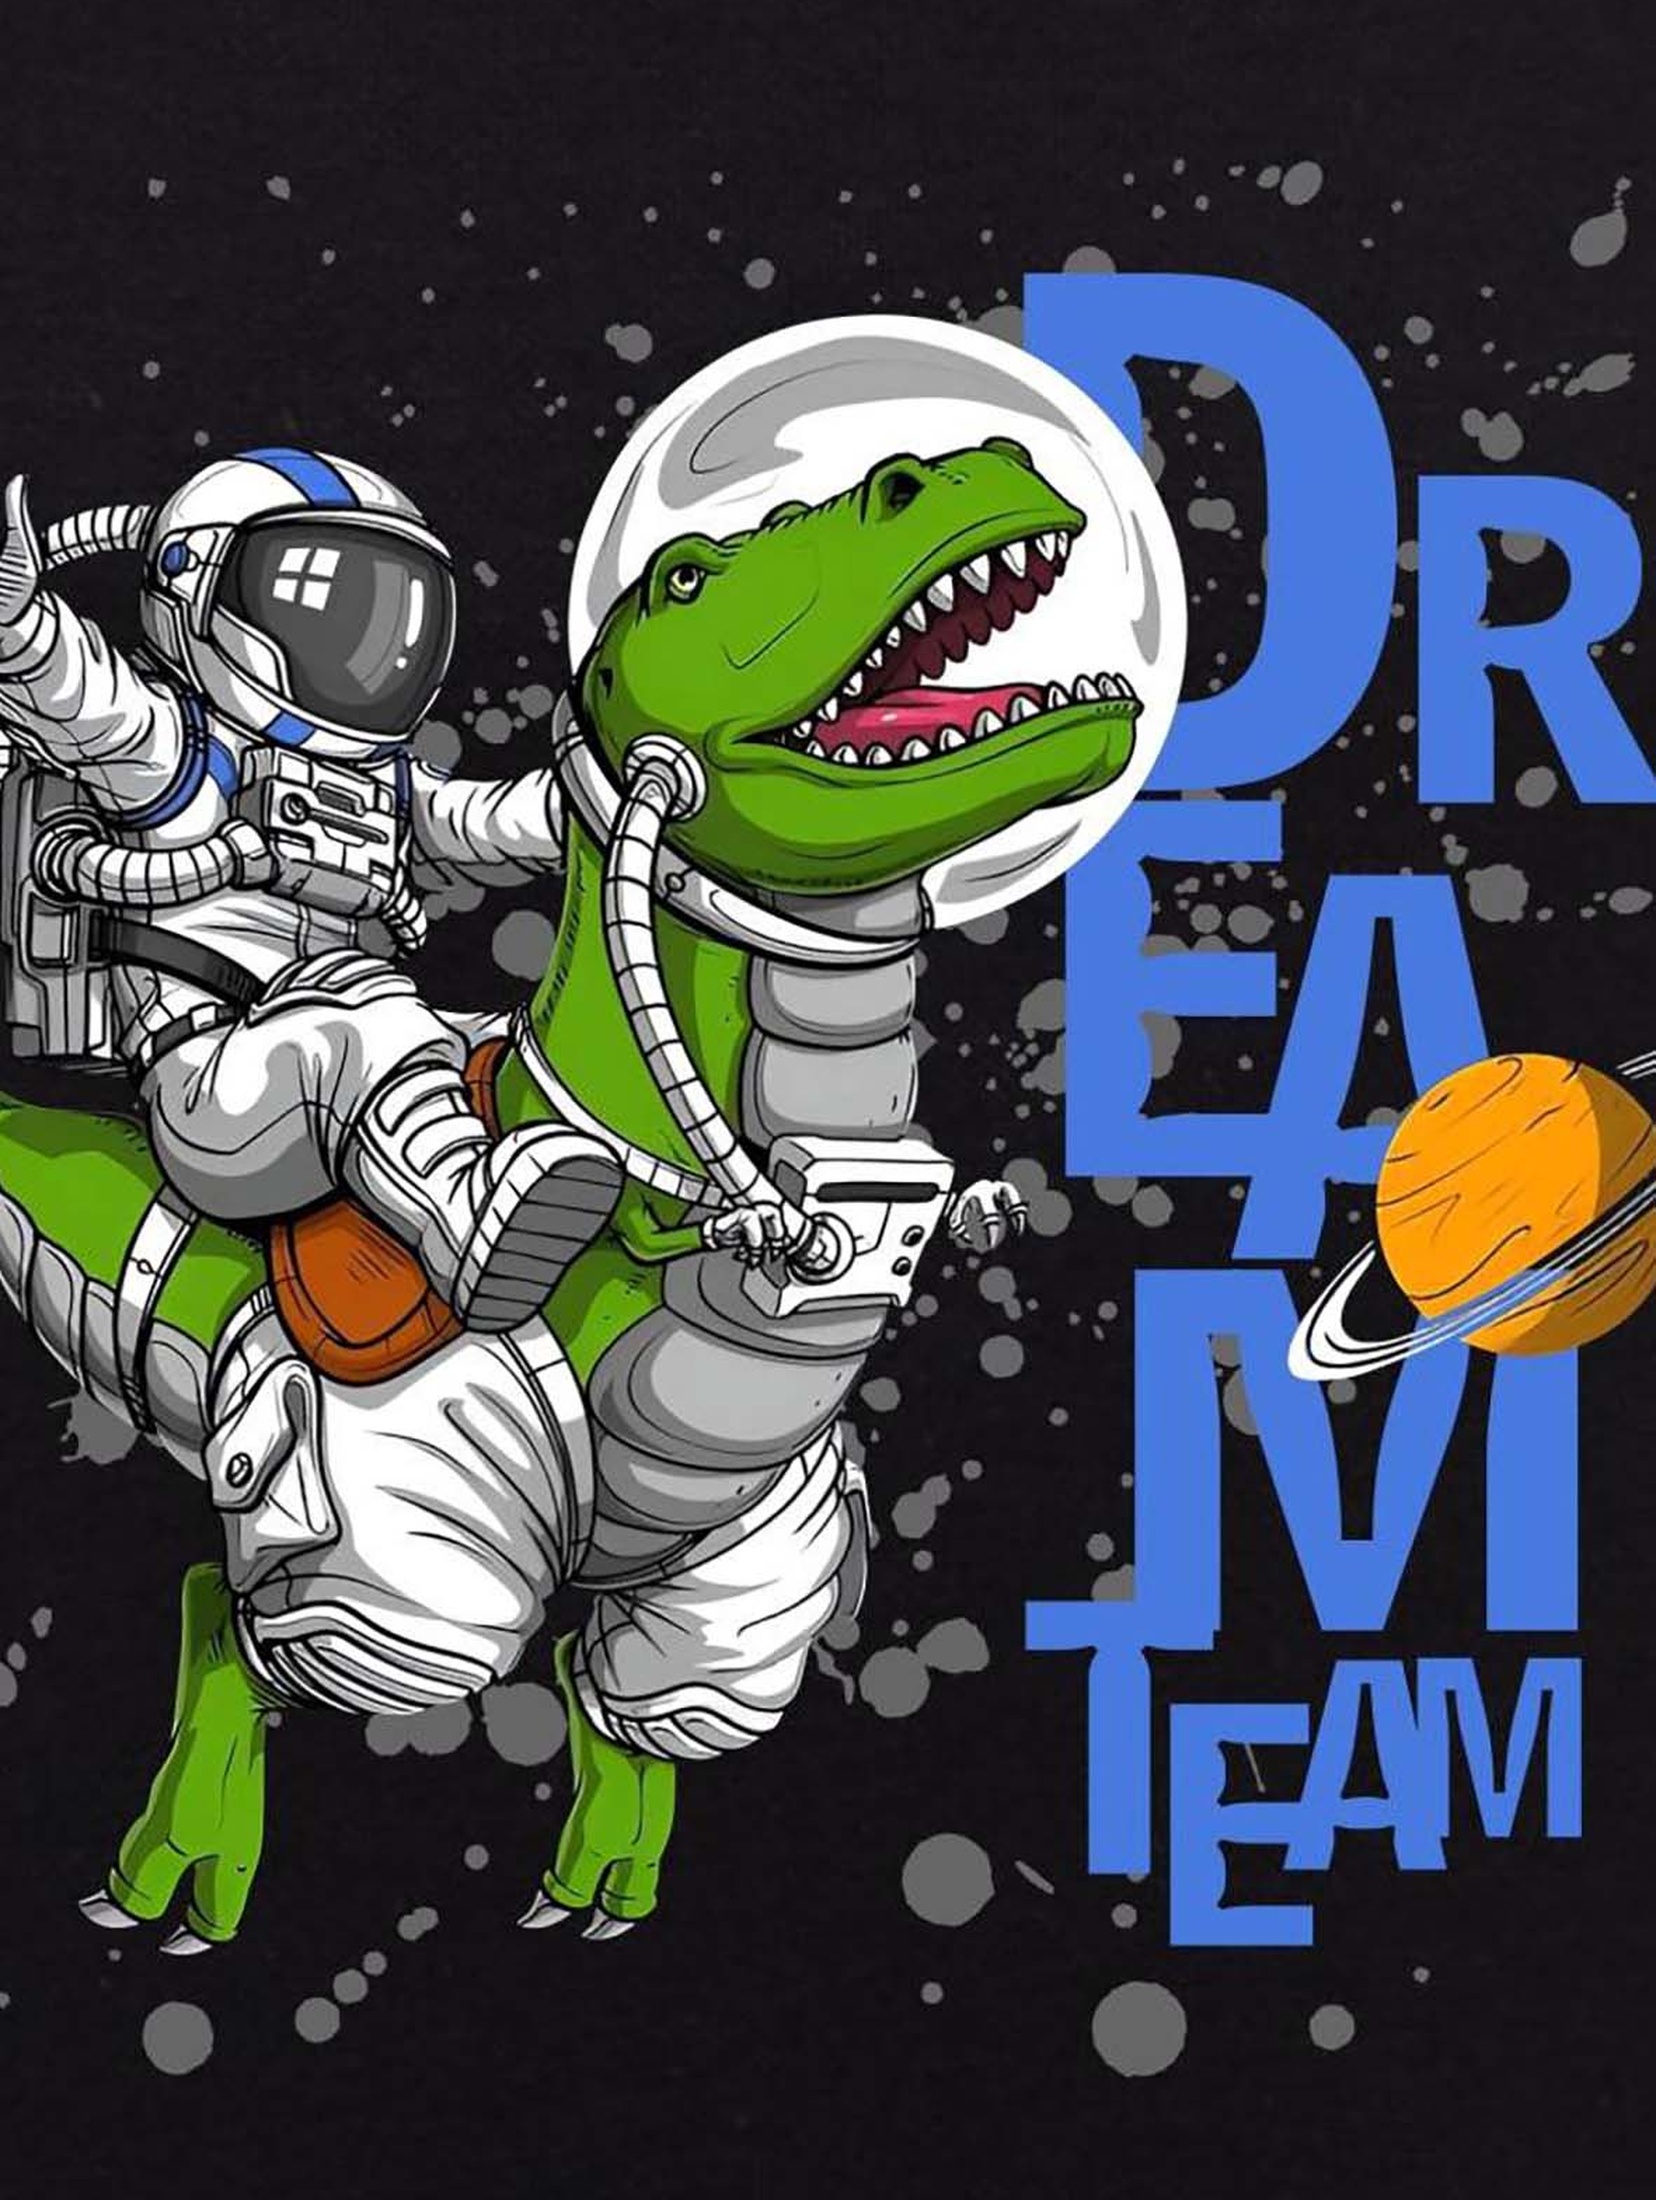 Dzianinowa bluza nierozpinana czarna Astronauta & Dinozaur